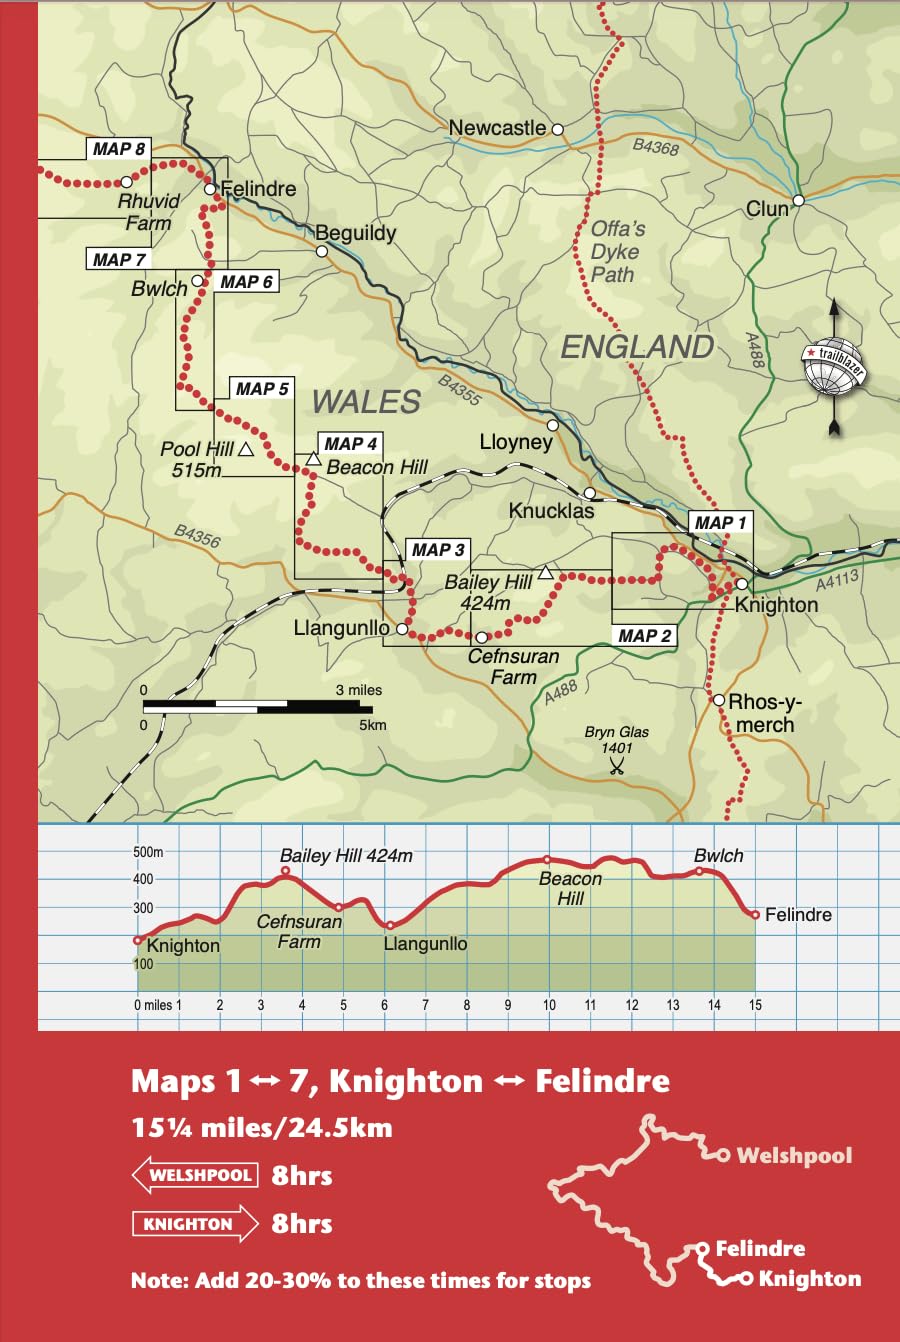 Topoguide de randonnées (en anglais) - Glyndwr's Way (Pays de Galles) | Trailblazer